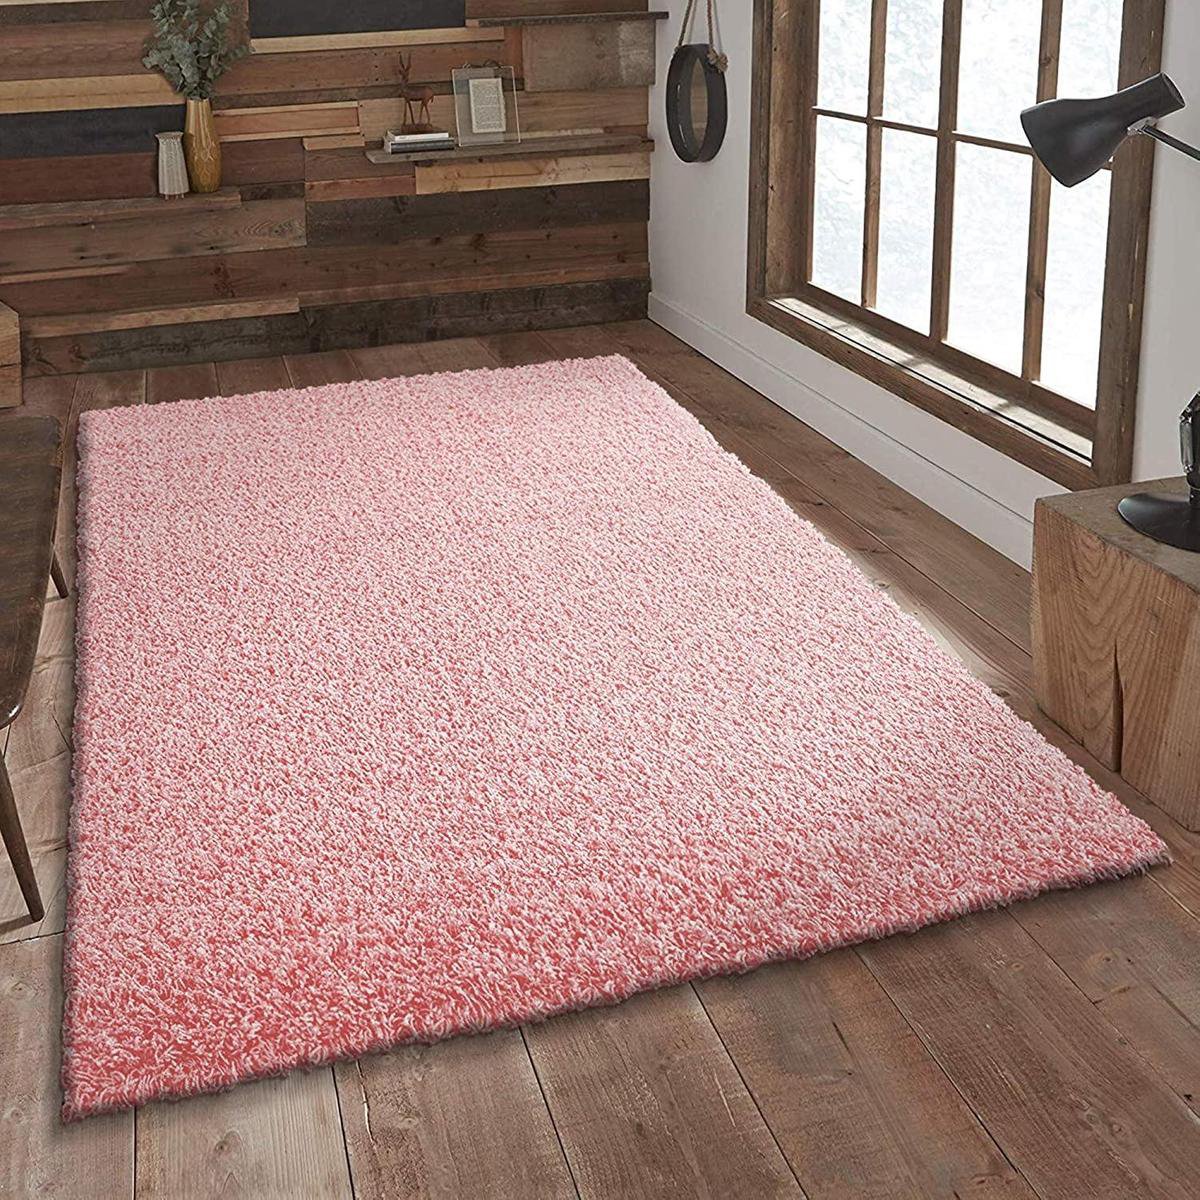 Shaggy Carpet hoge stapel tapijt woonkamer tapijt karo roze grijze crème 